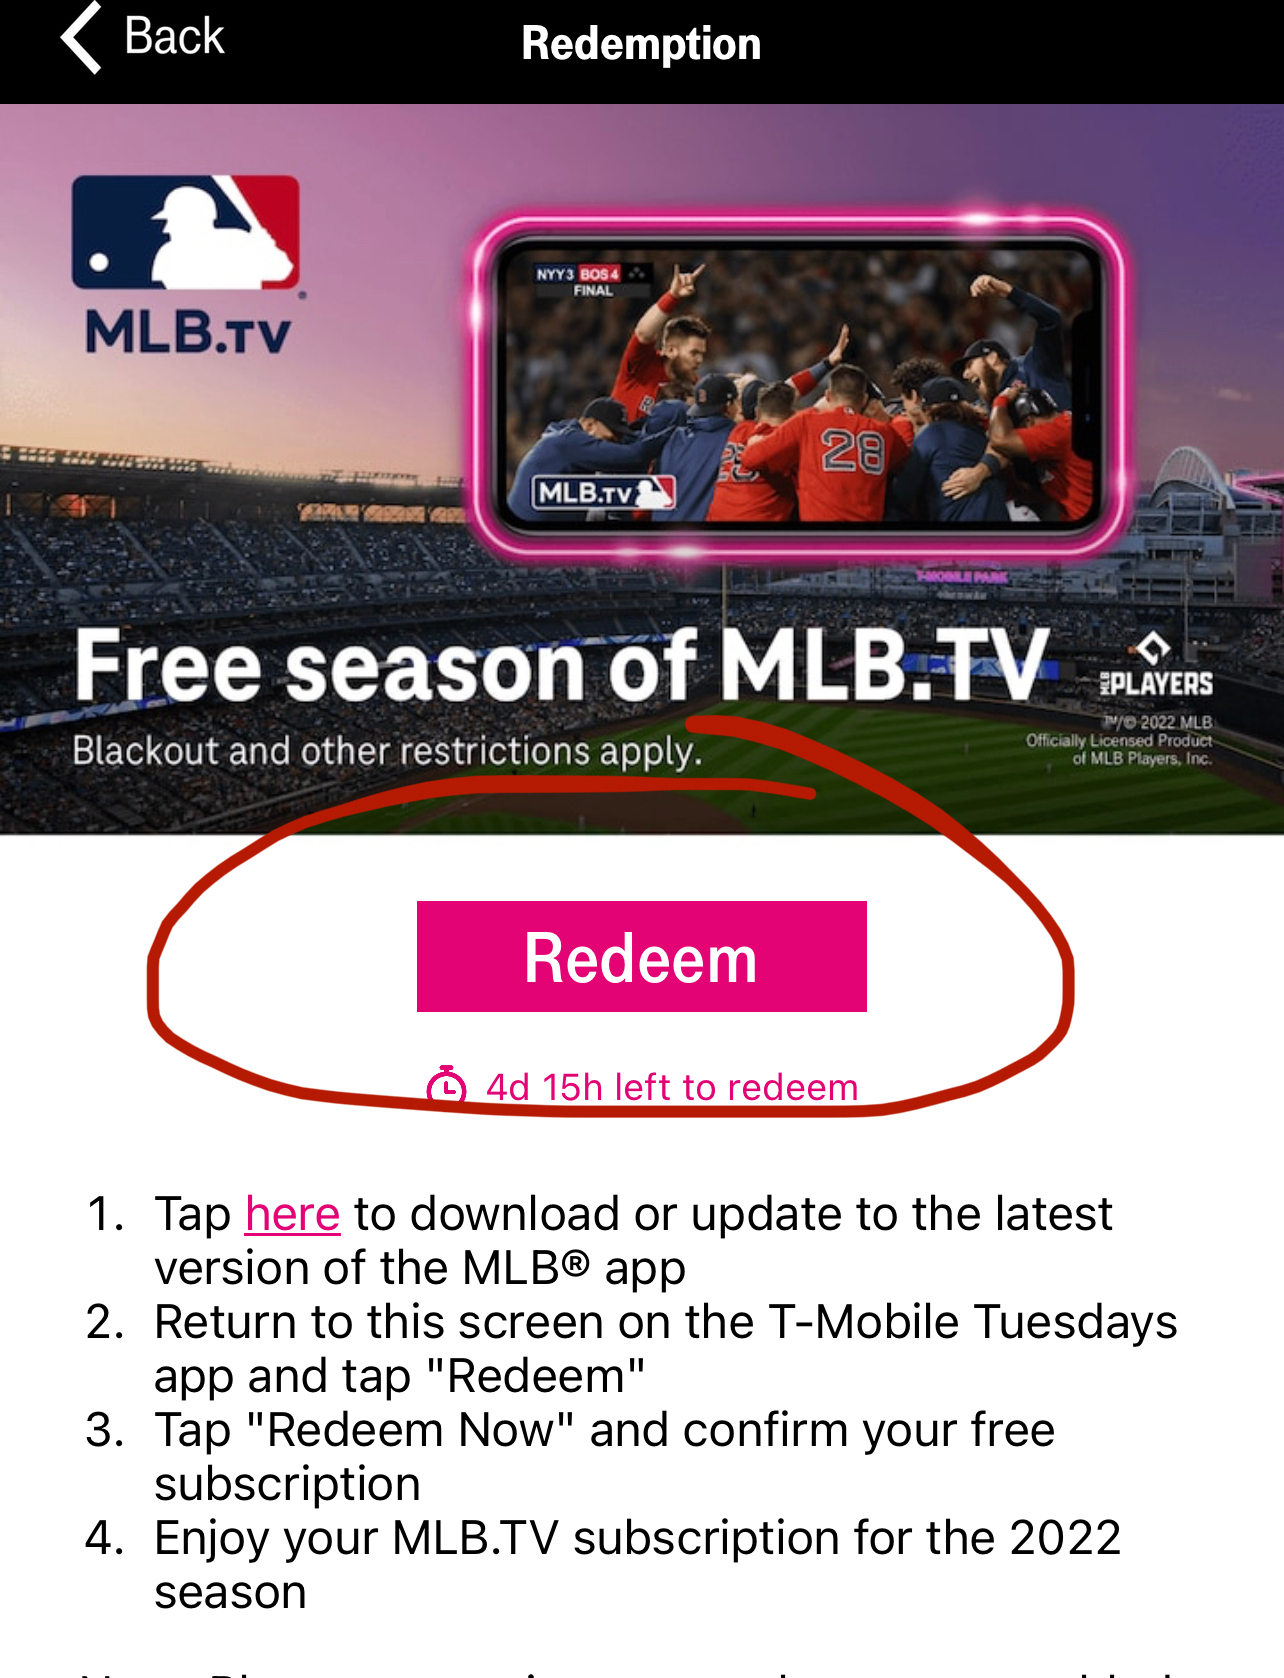 TAPPP - MLB.TV Prepaid Card Redemption